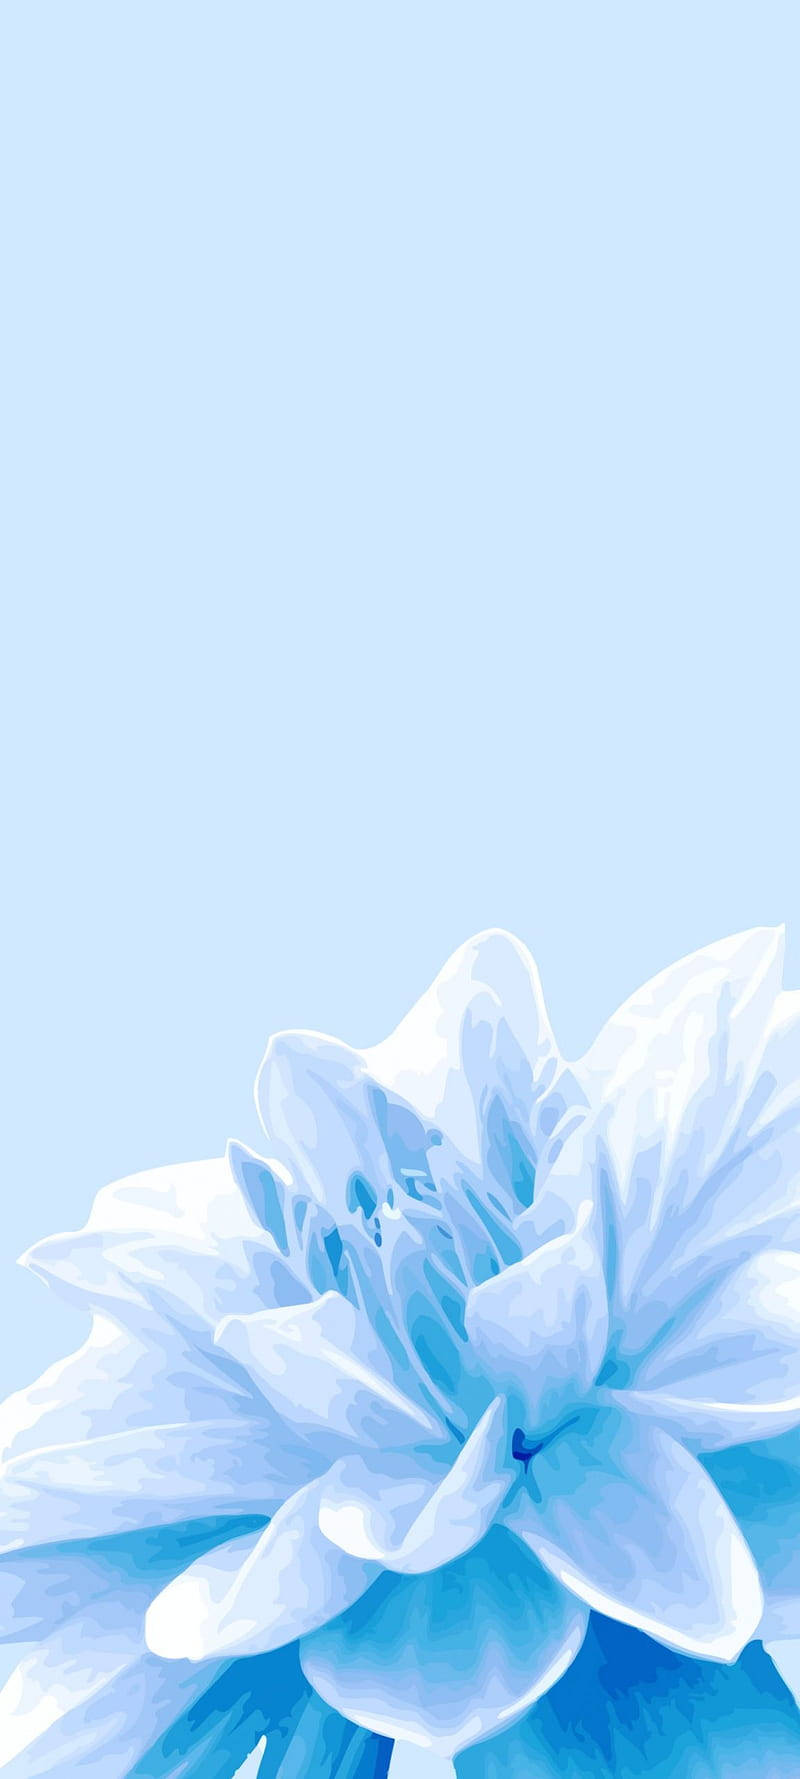 Vibrant 3d Flower Design On A Cute Blue Phone Wallpaper